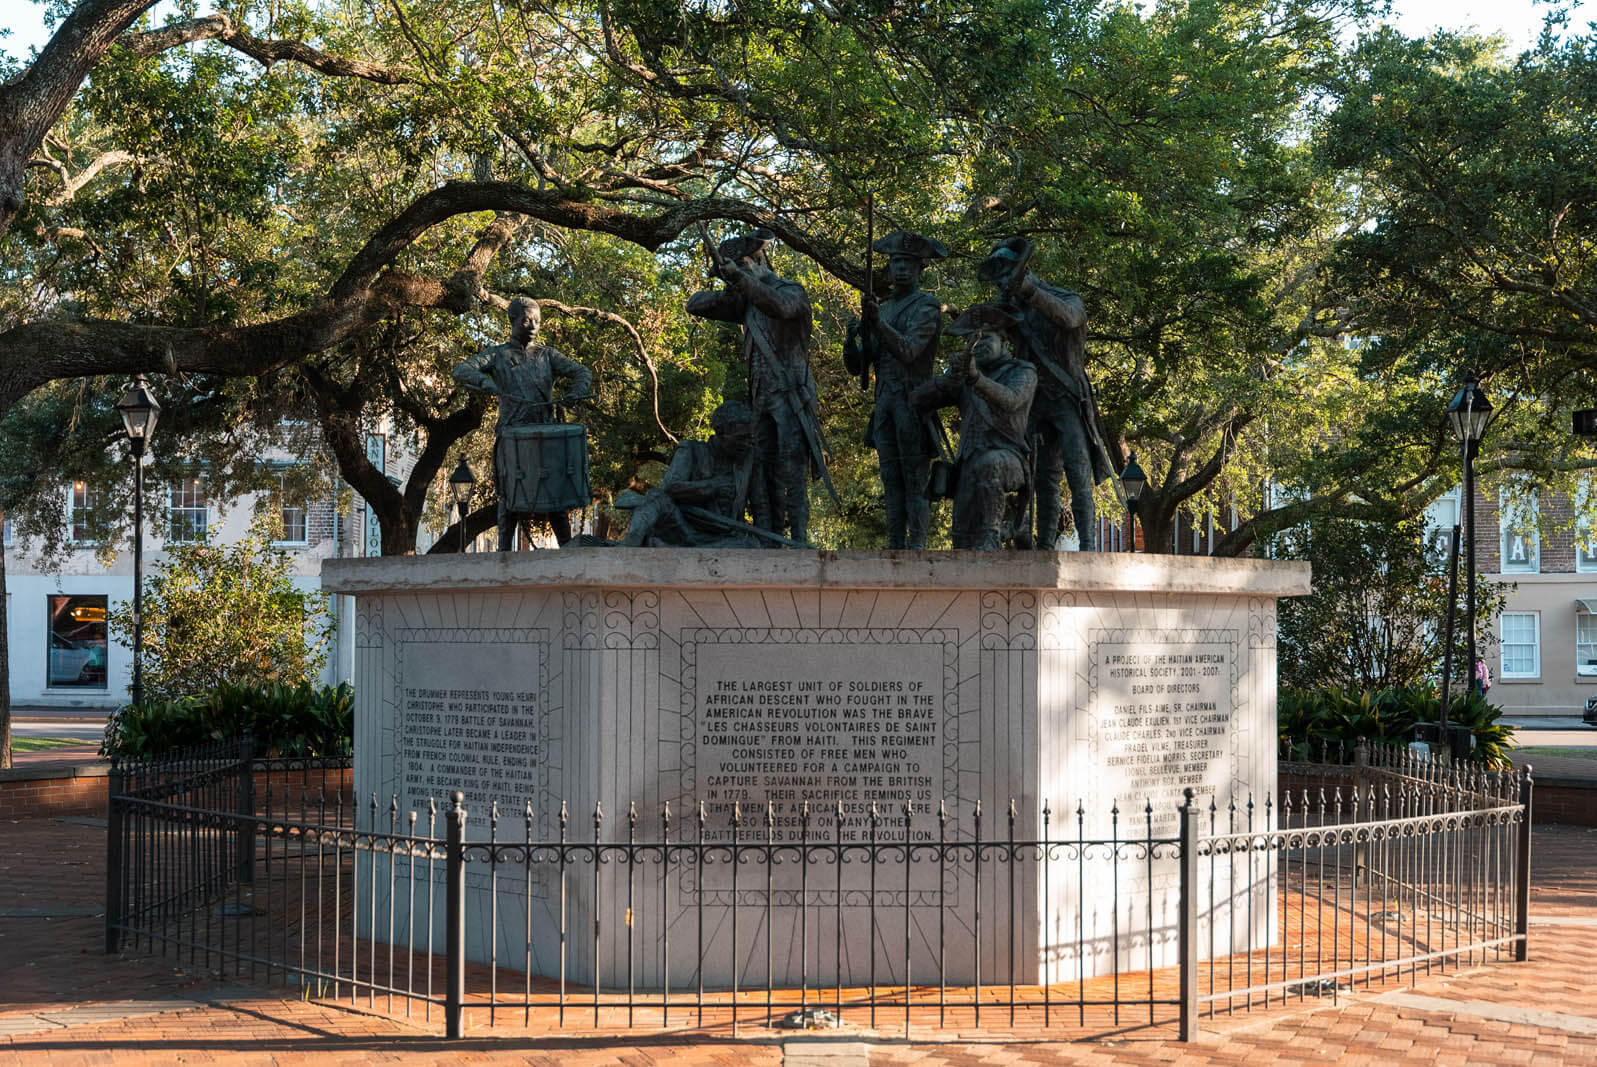 Haitian Monument at Franklin Square in Savannah GA